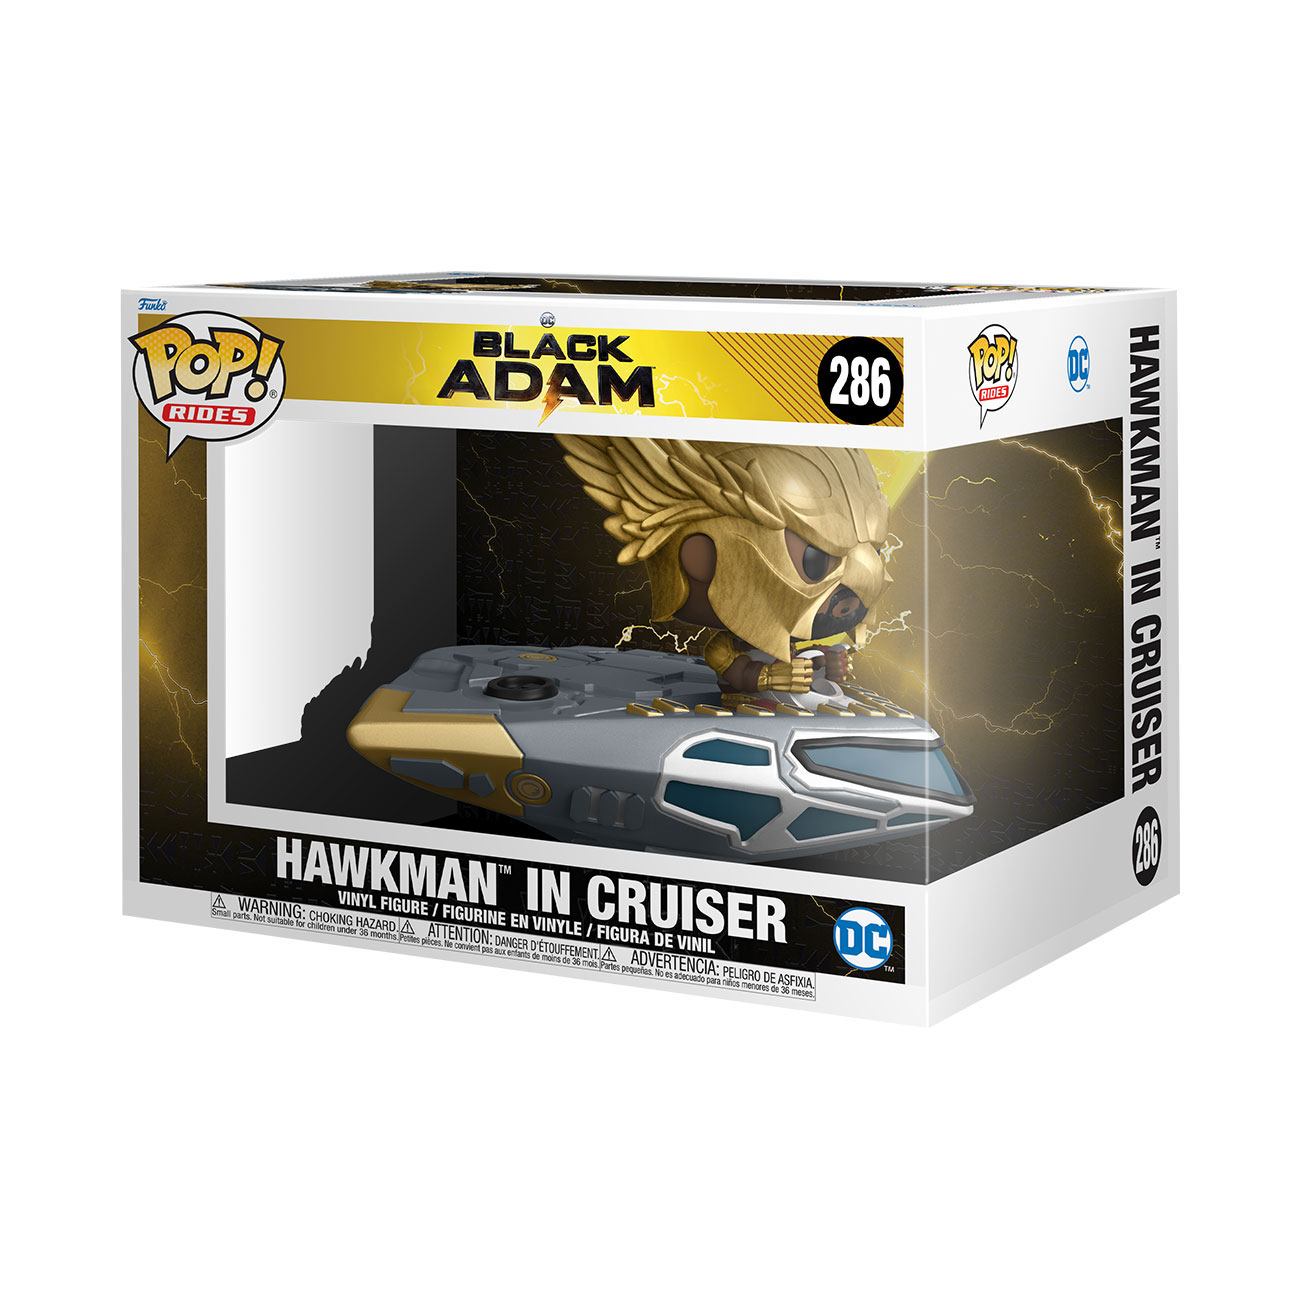 Rides - Black Adam - Hawkman in Cruiser - 286